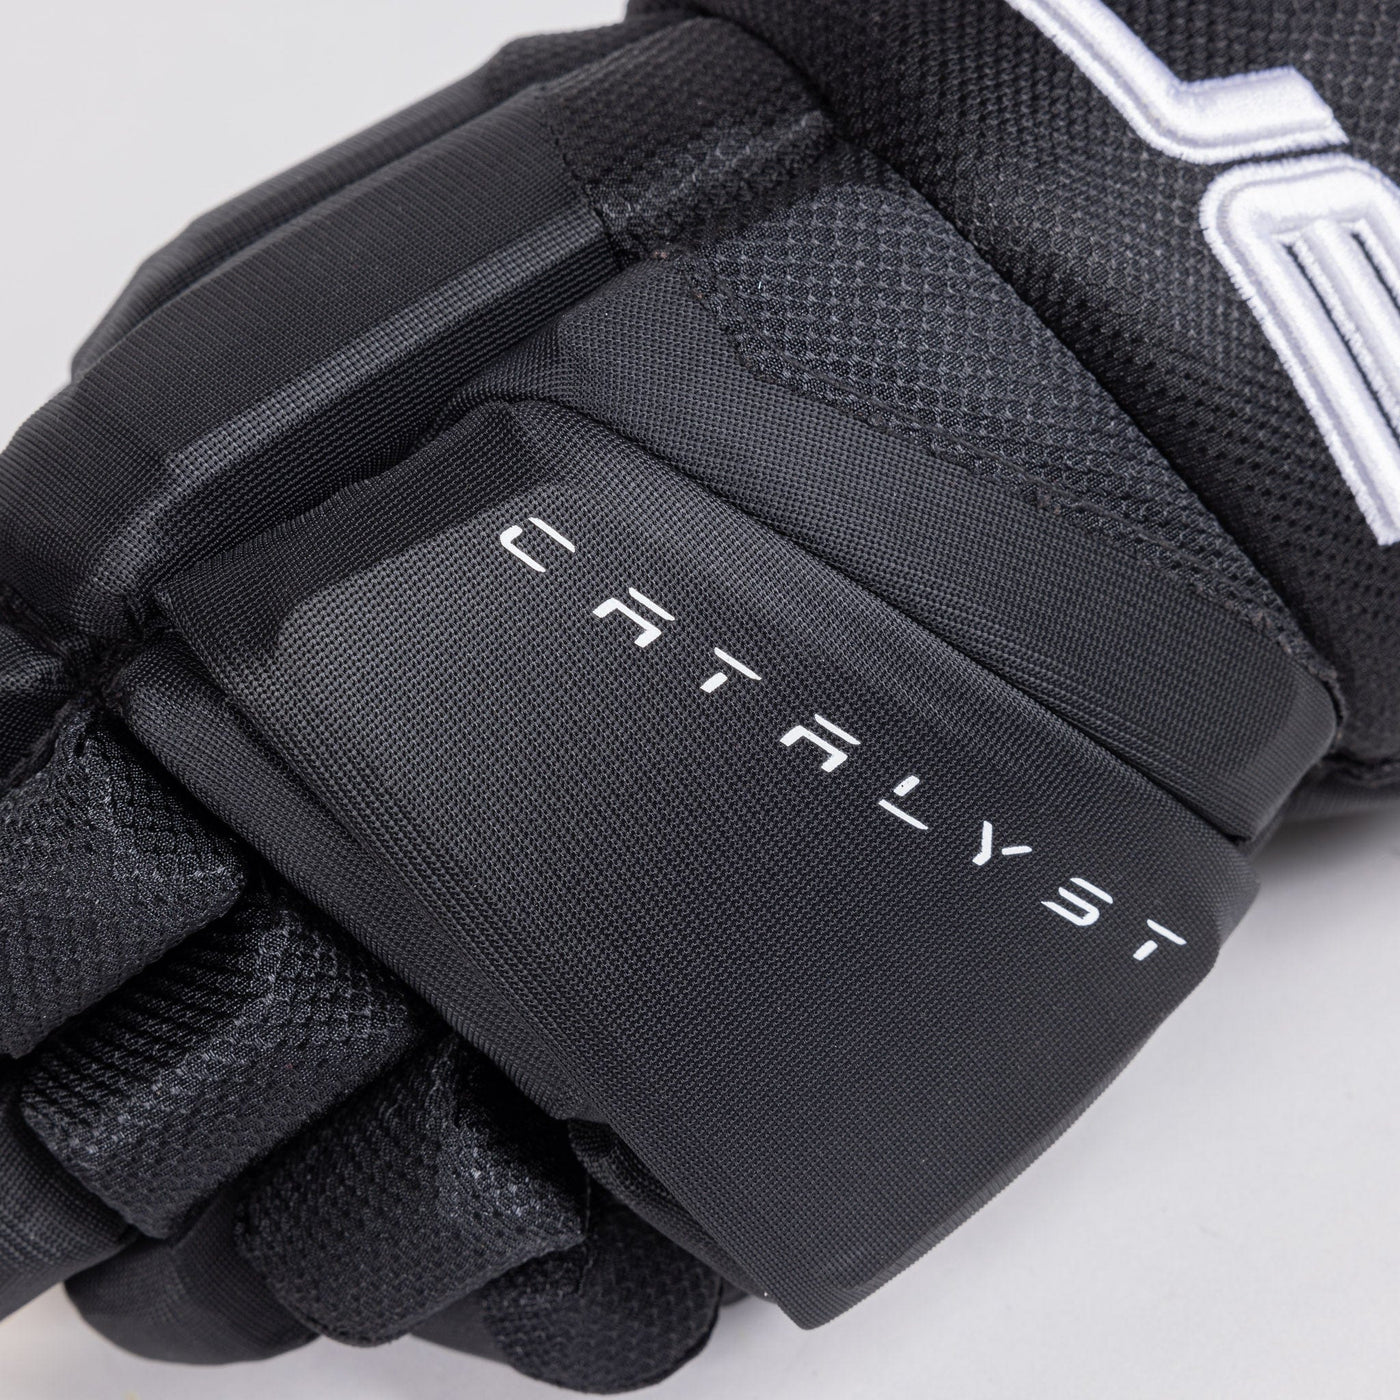 TRUE Catalyst Pro Stock Senior Hockey Glove - LA Kings - The Hockey Shop Source For Sports